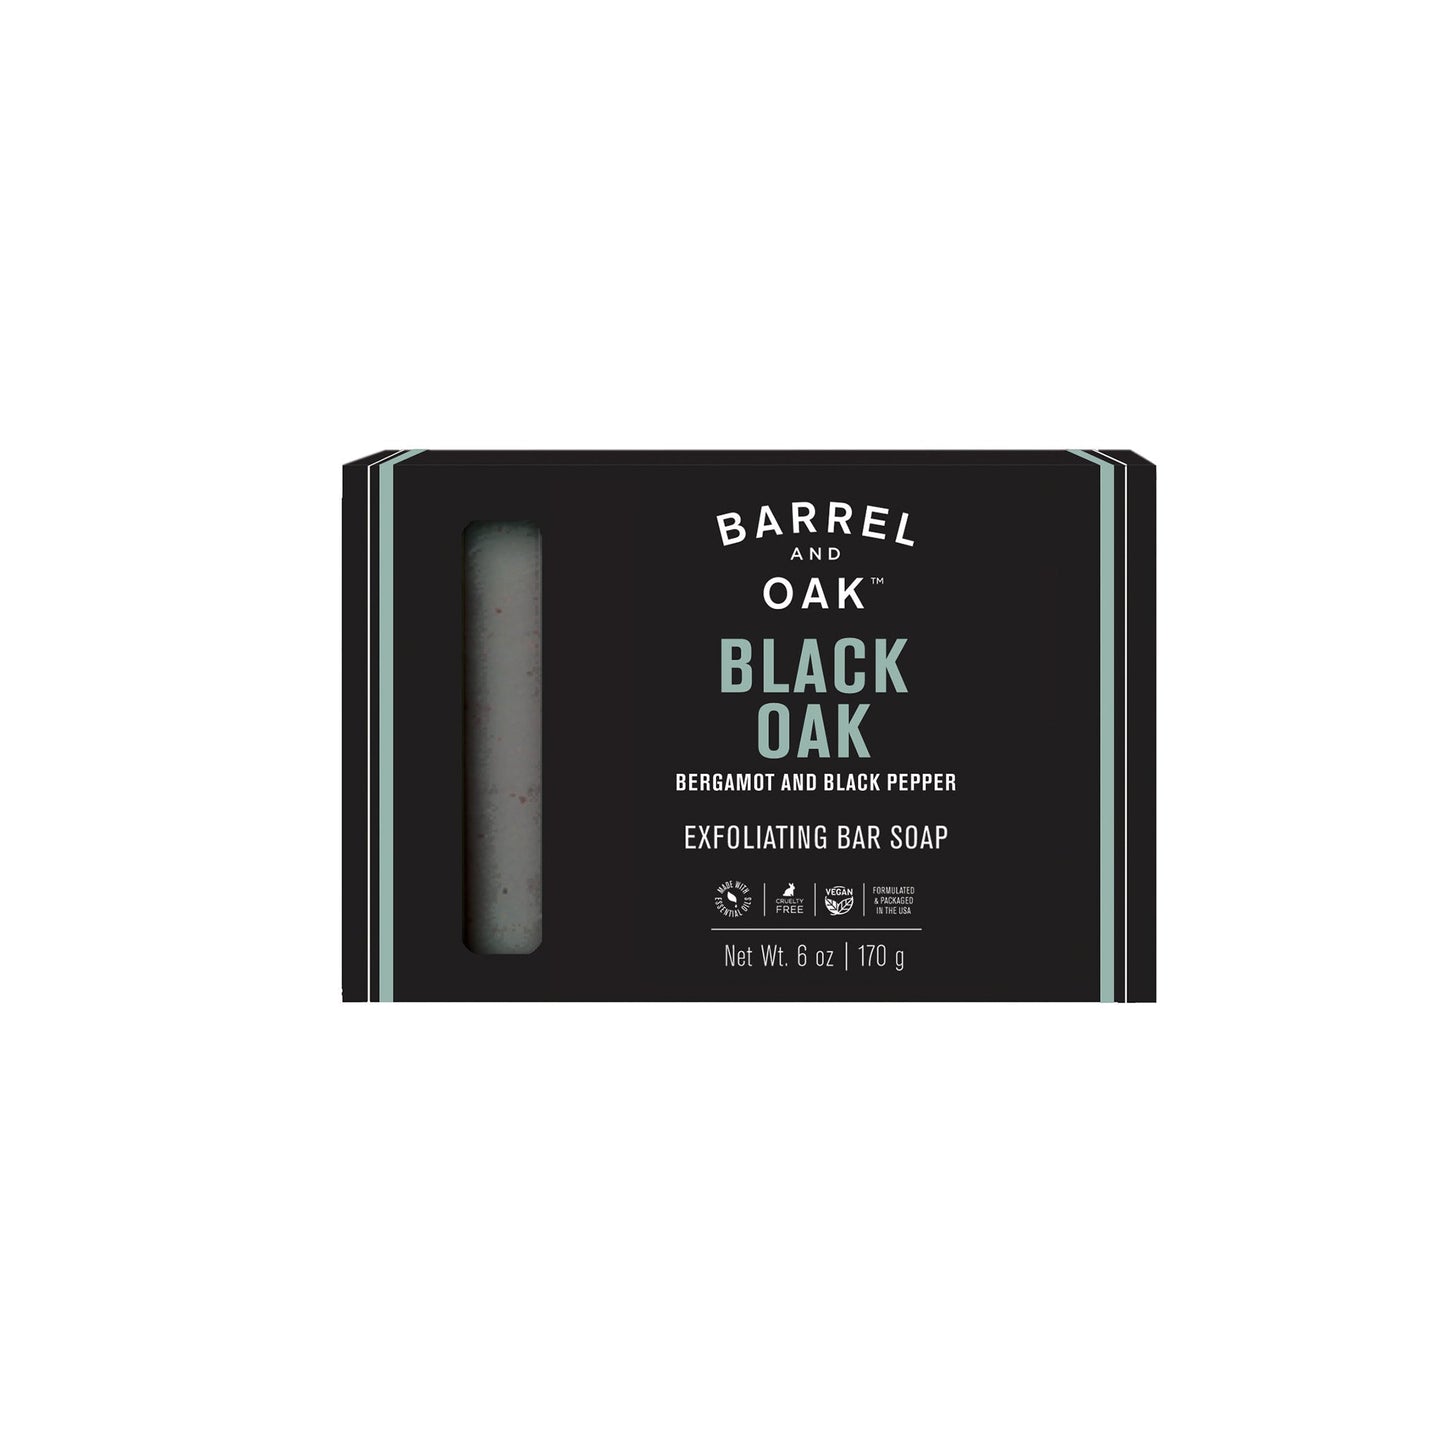 Black Oak Exfoliating Bar Soap